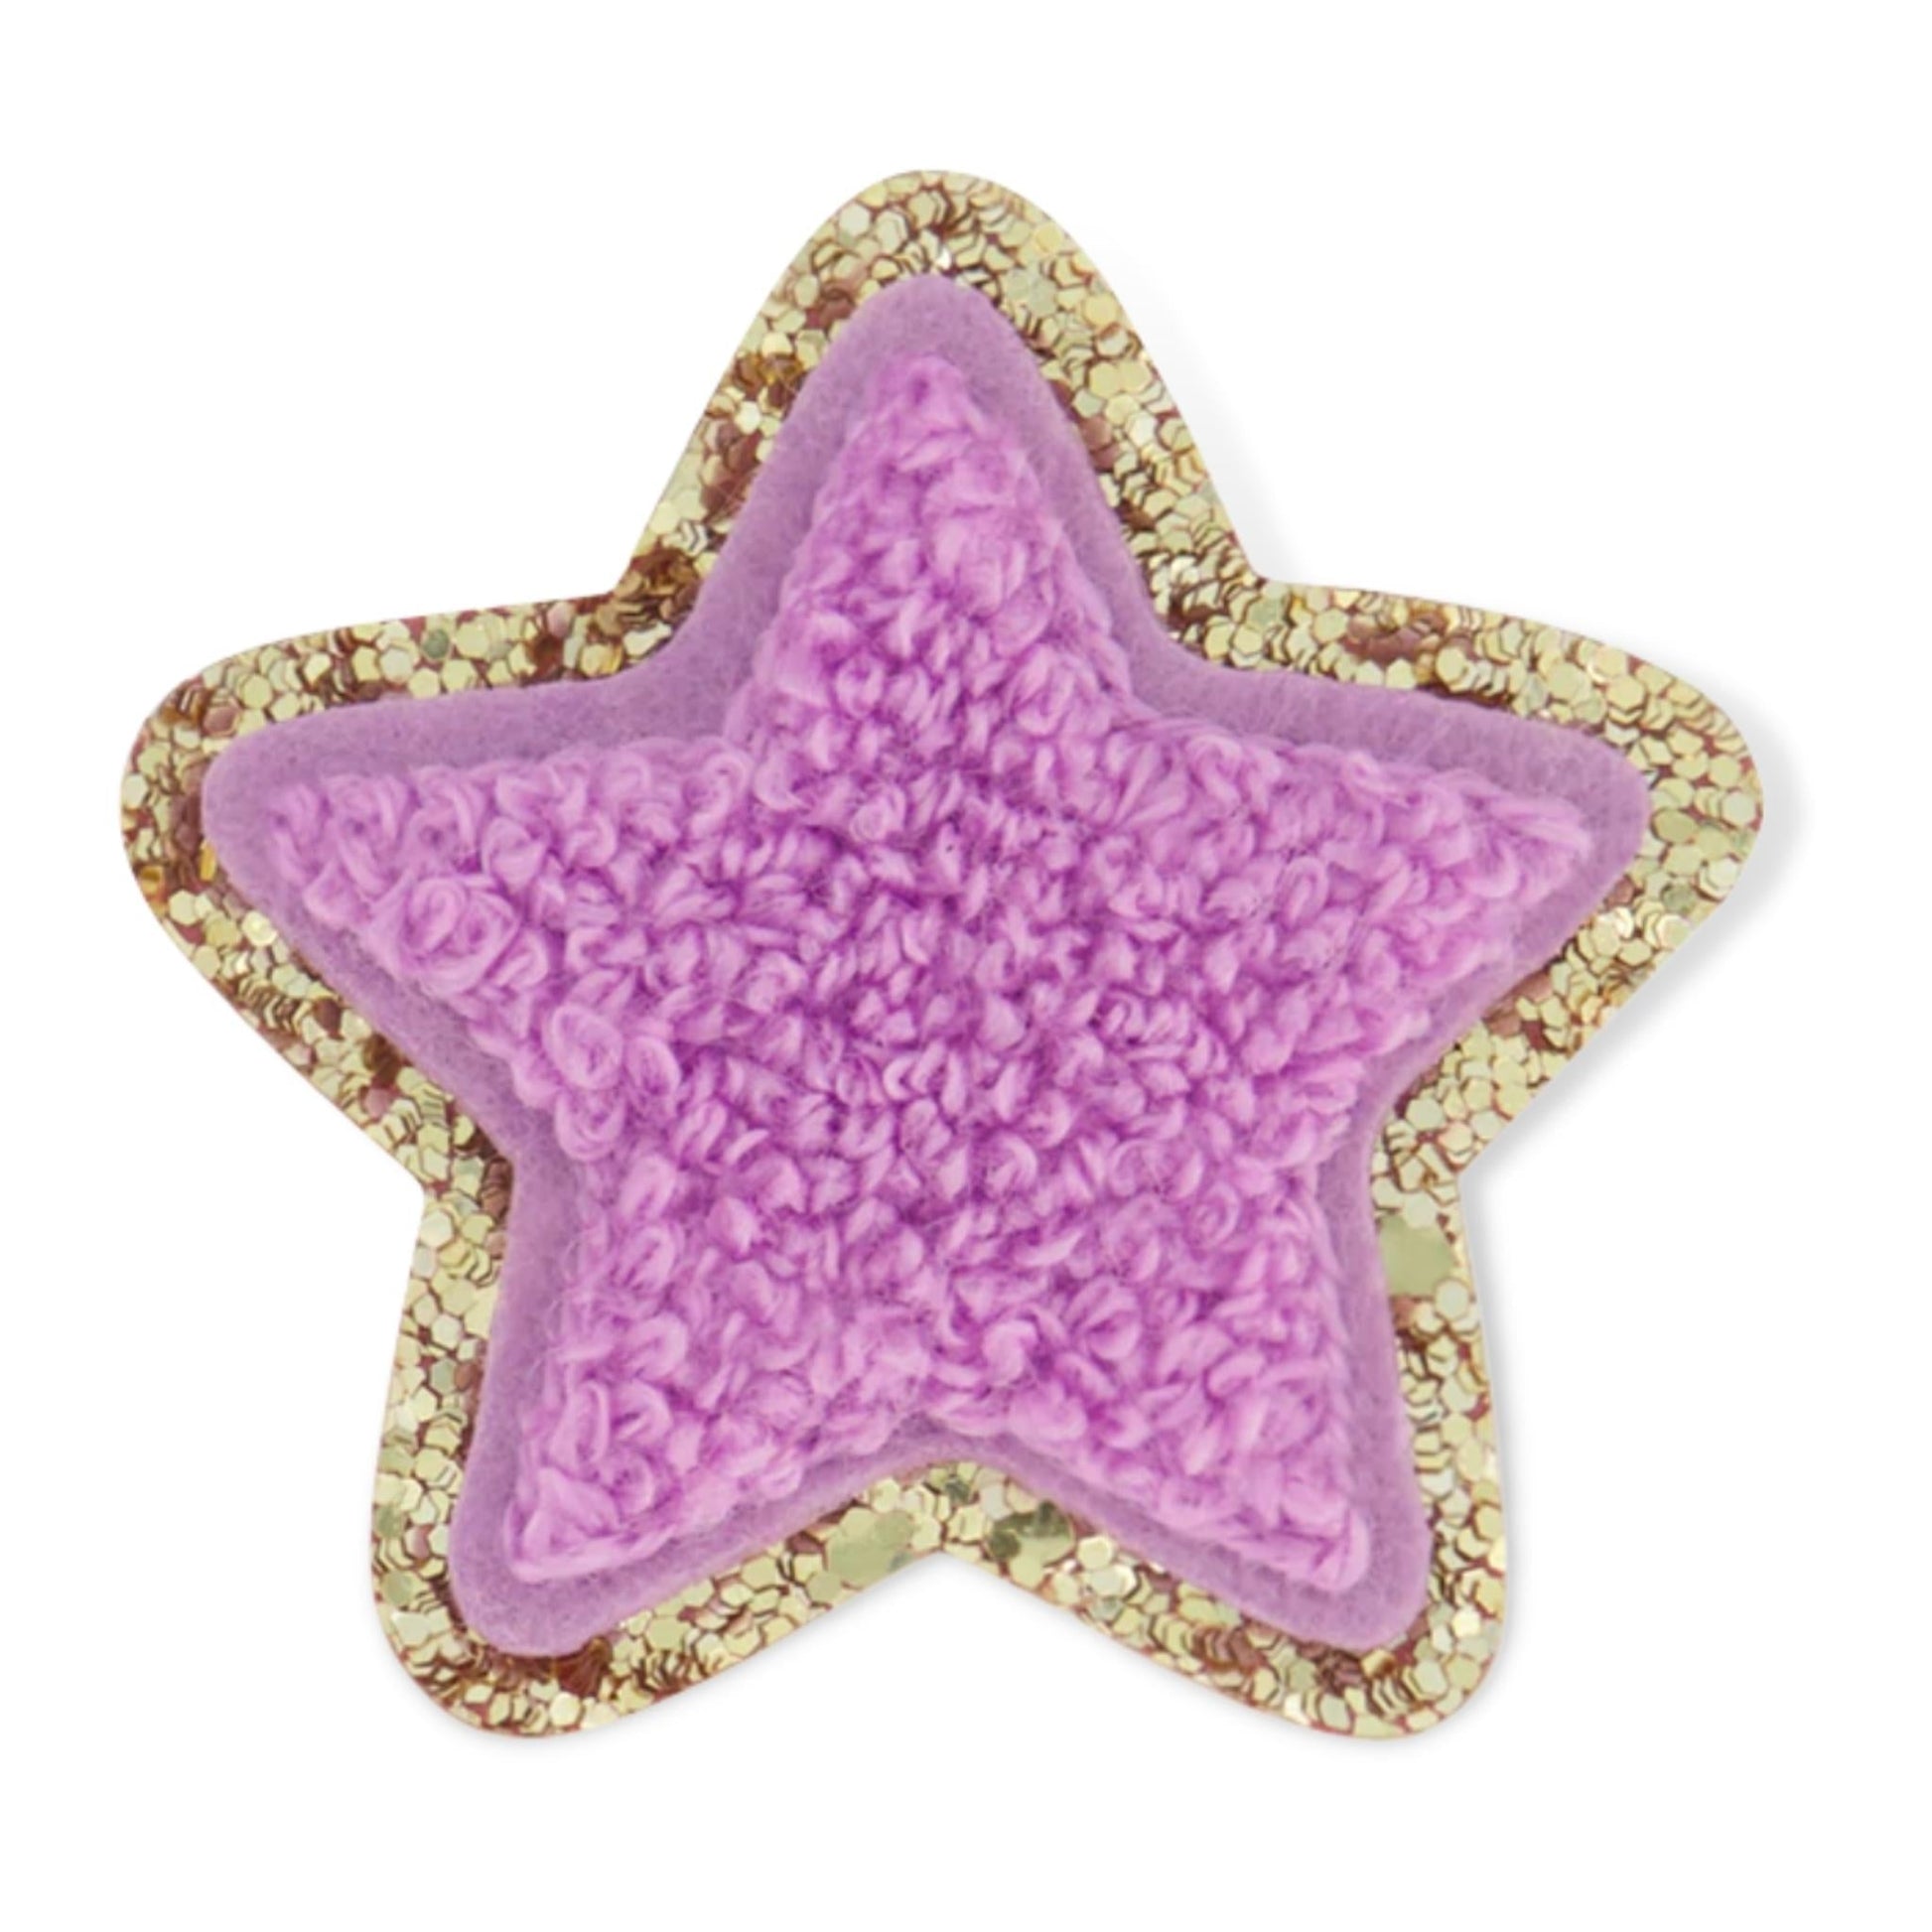 SCLN Grape Glitter Star Shape Patch - a Spirit Animal - Patches active Jun 2022 Clover gifts